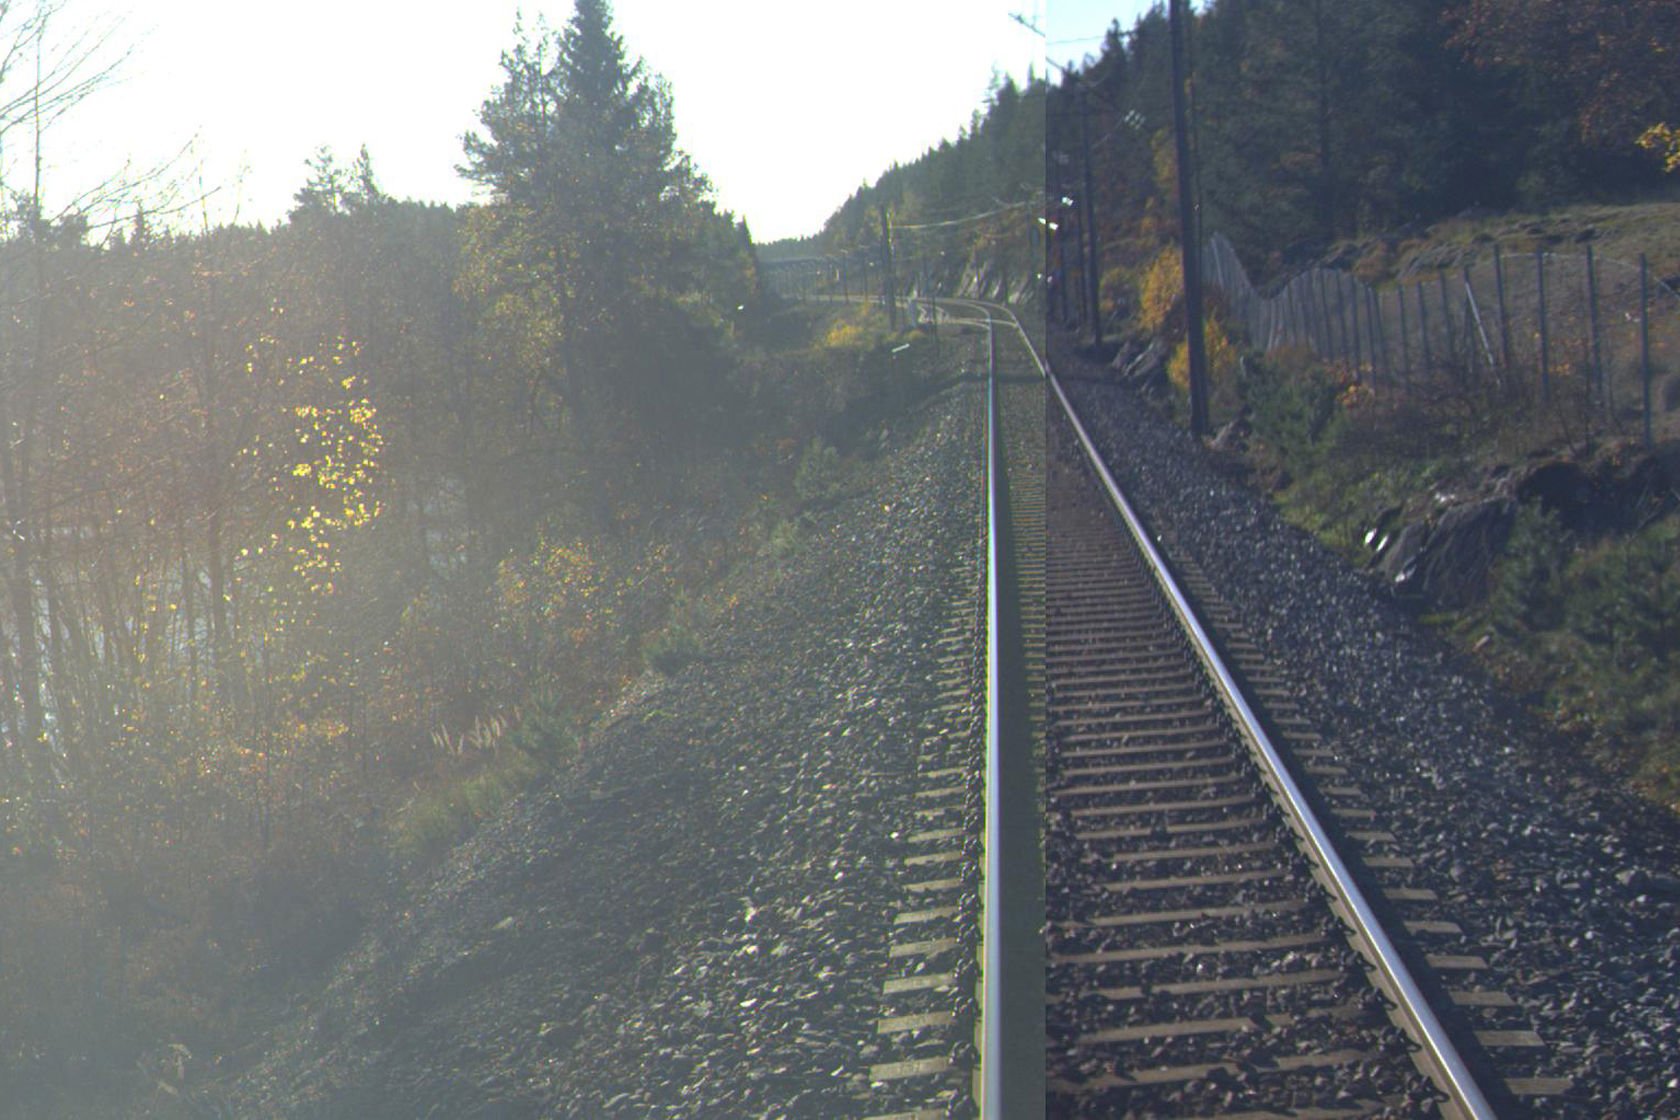 Spor på Skorstøl stasjon